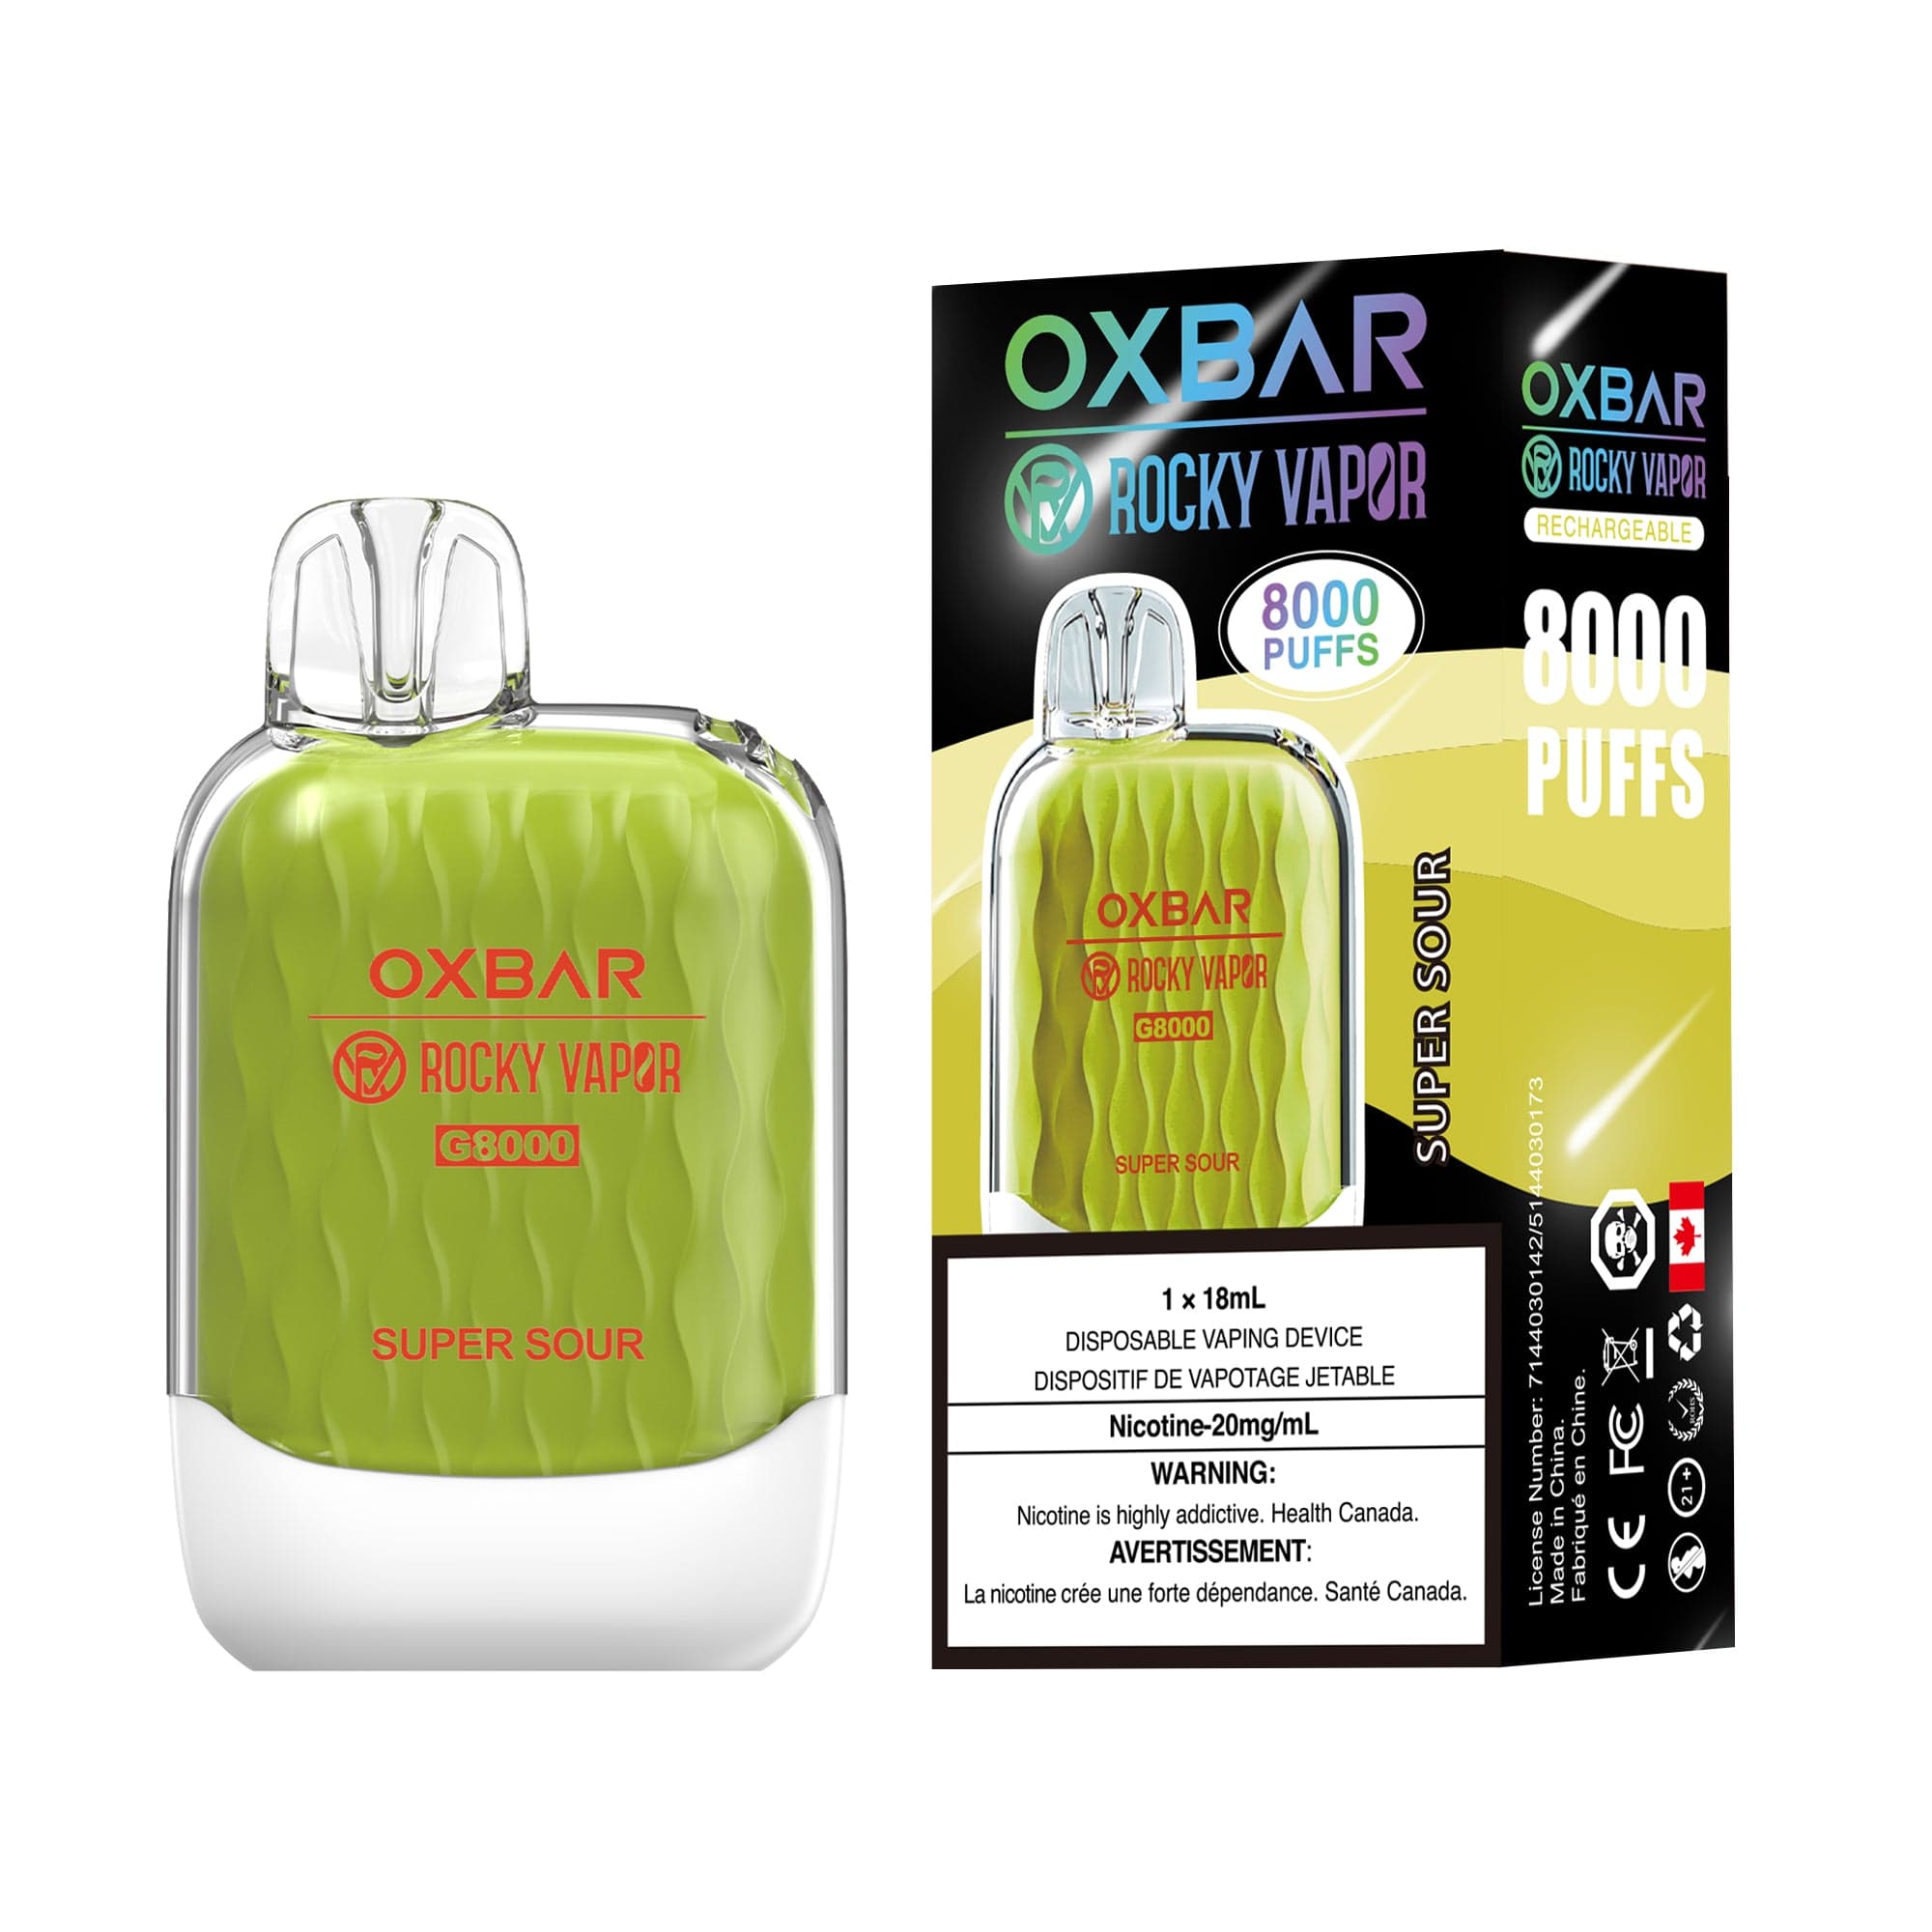 OXBAR x Rocky Vapor G8000 - Super Sour Disposable Vape available on Canada online vape shop